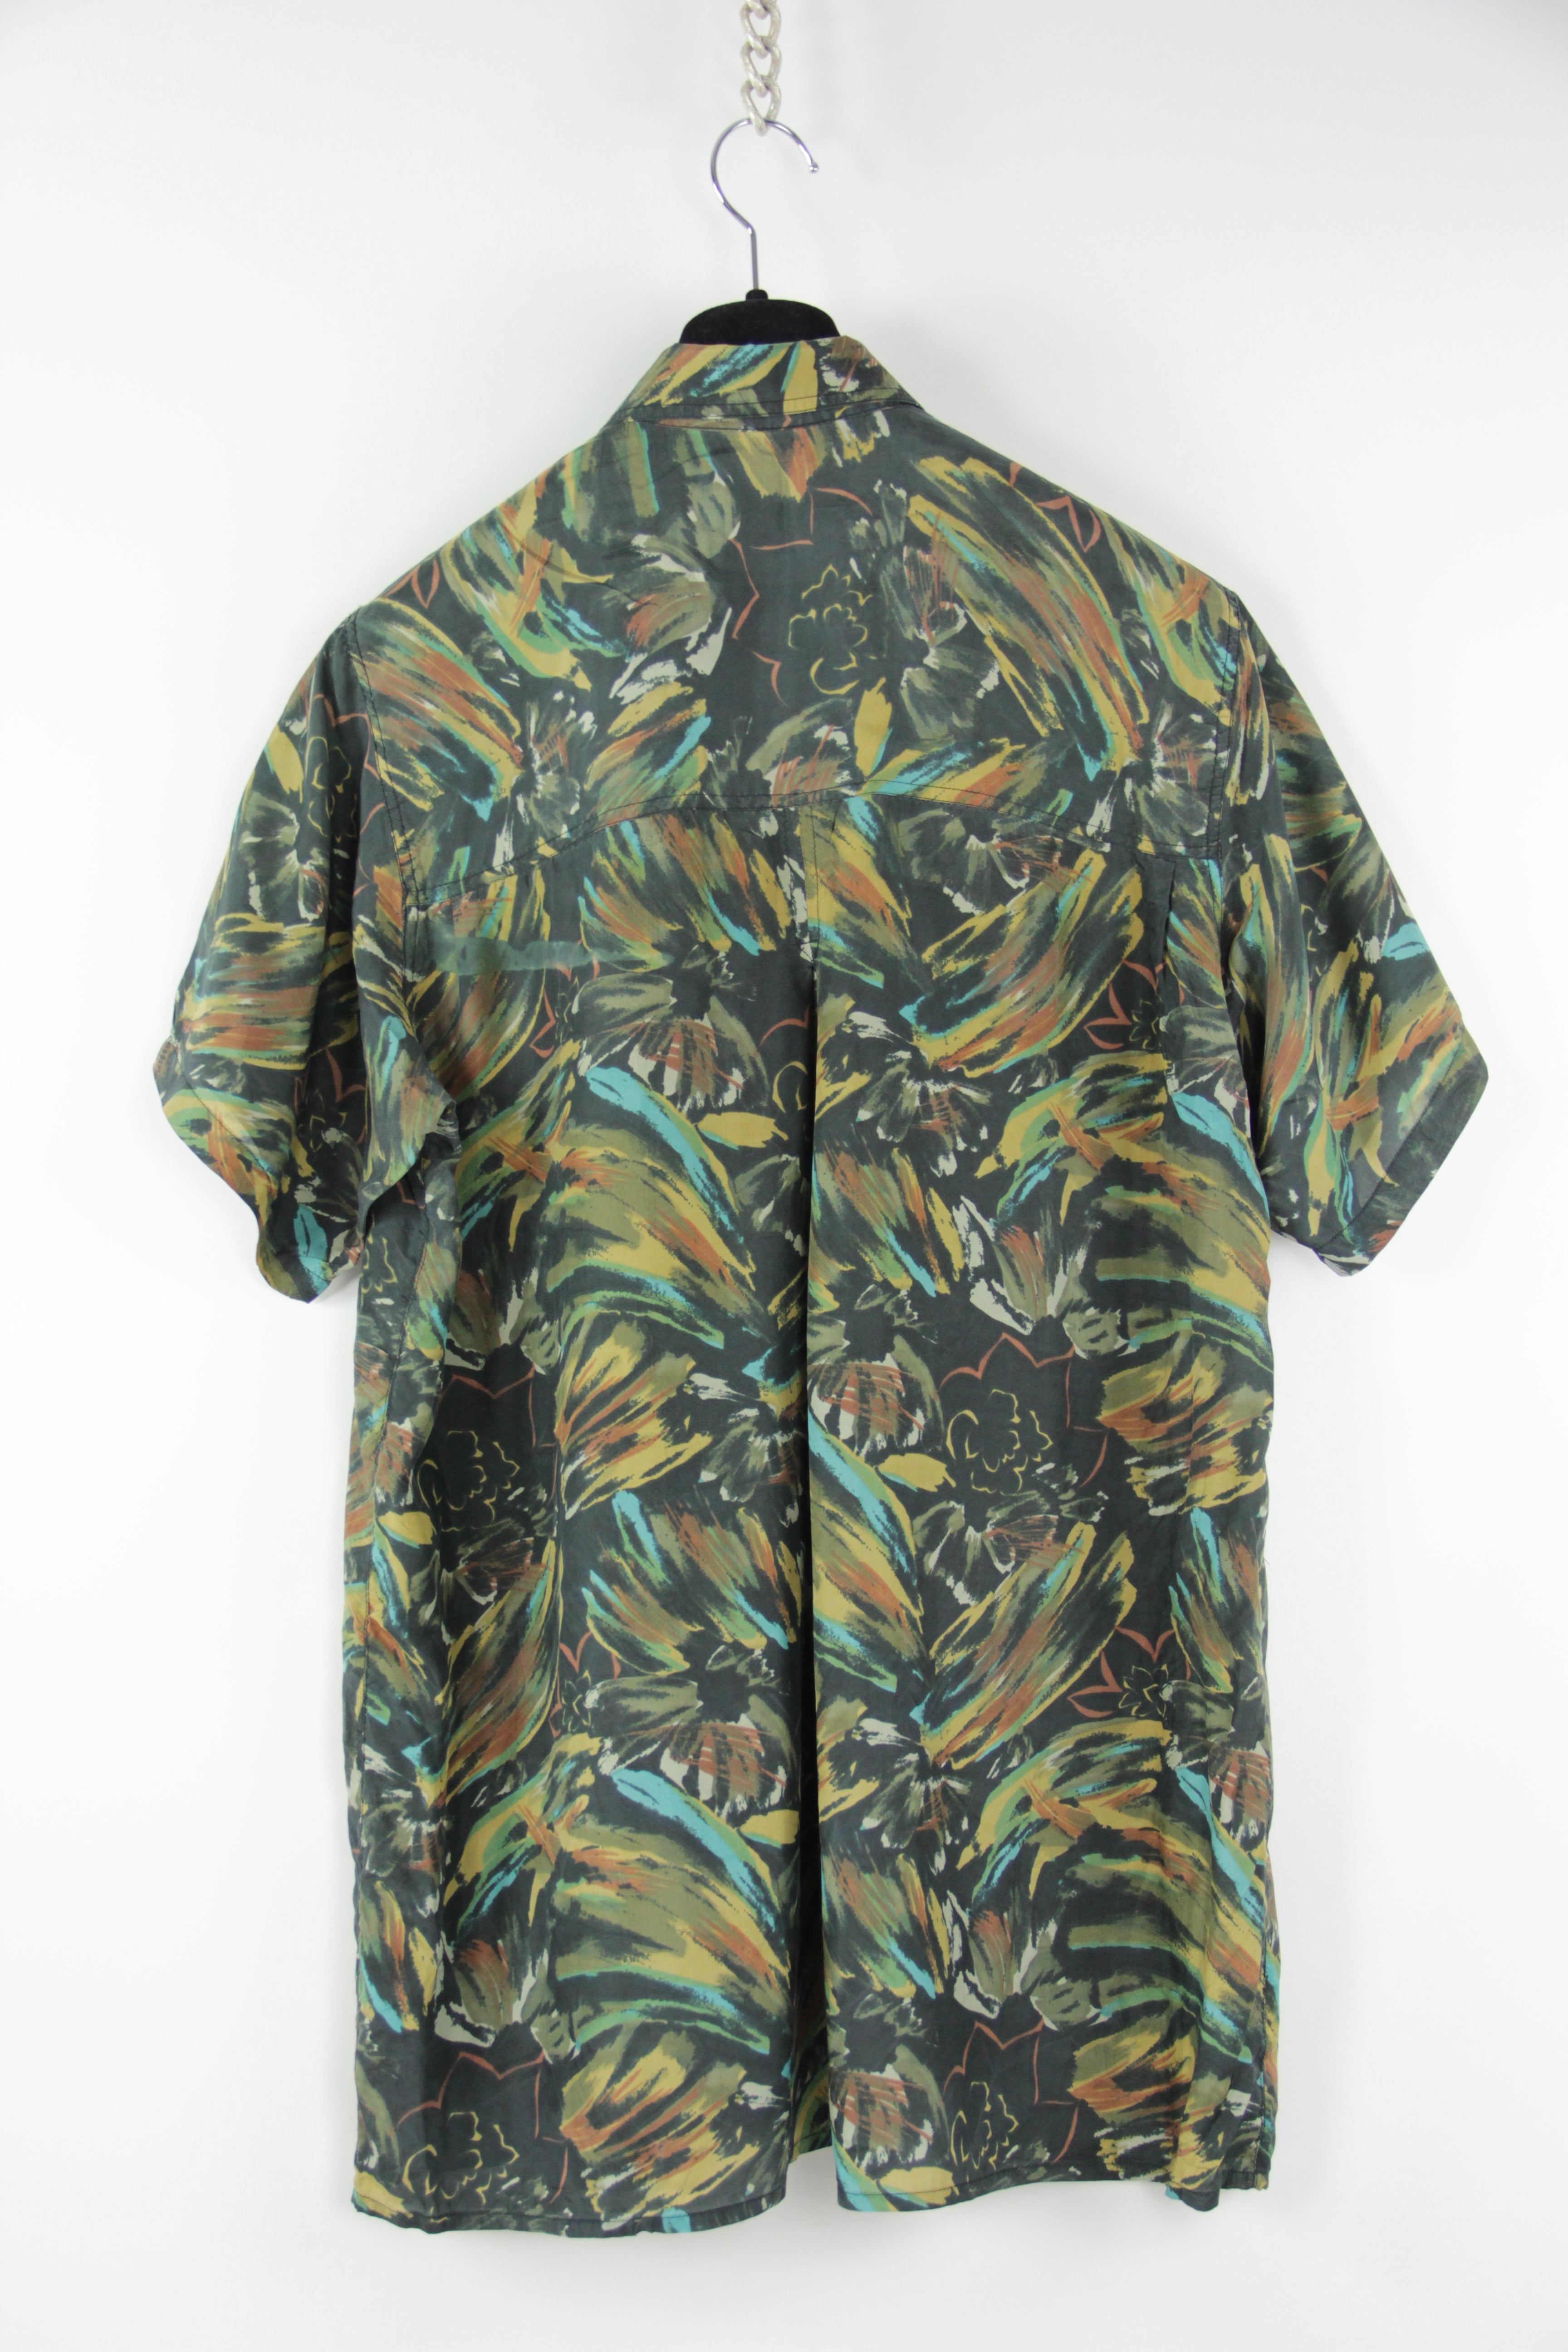 Vintage Men's 100% Silk Khaki Green Floral / Camo Print Shirt, SIZE S